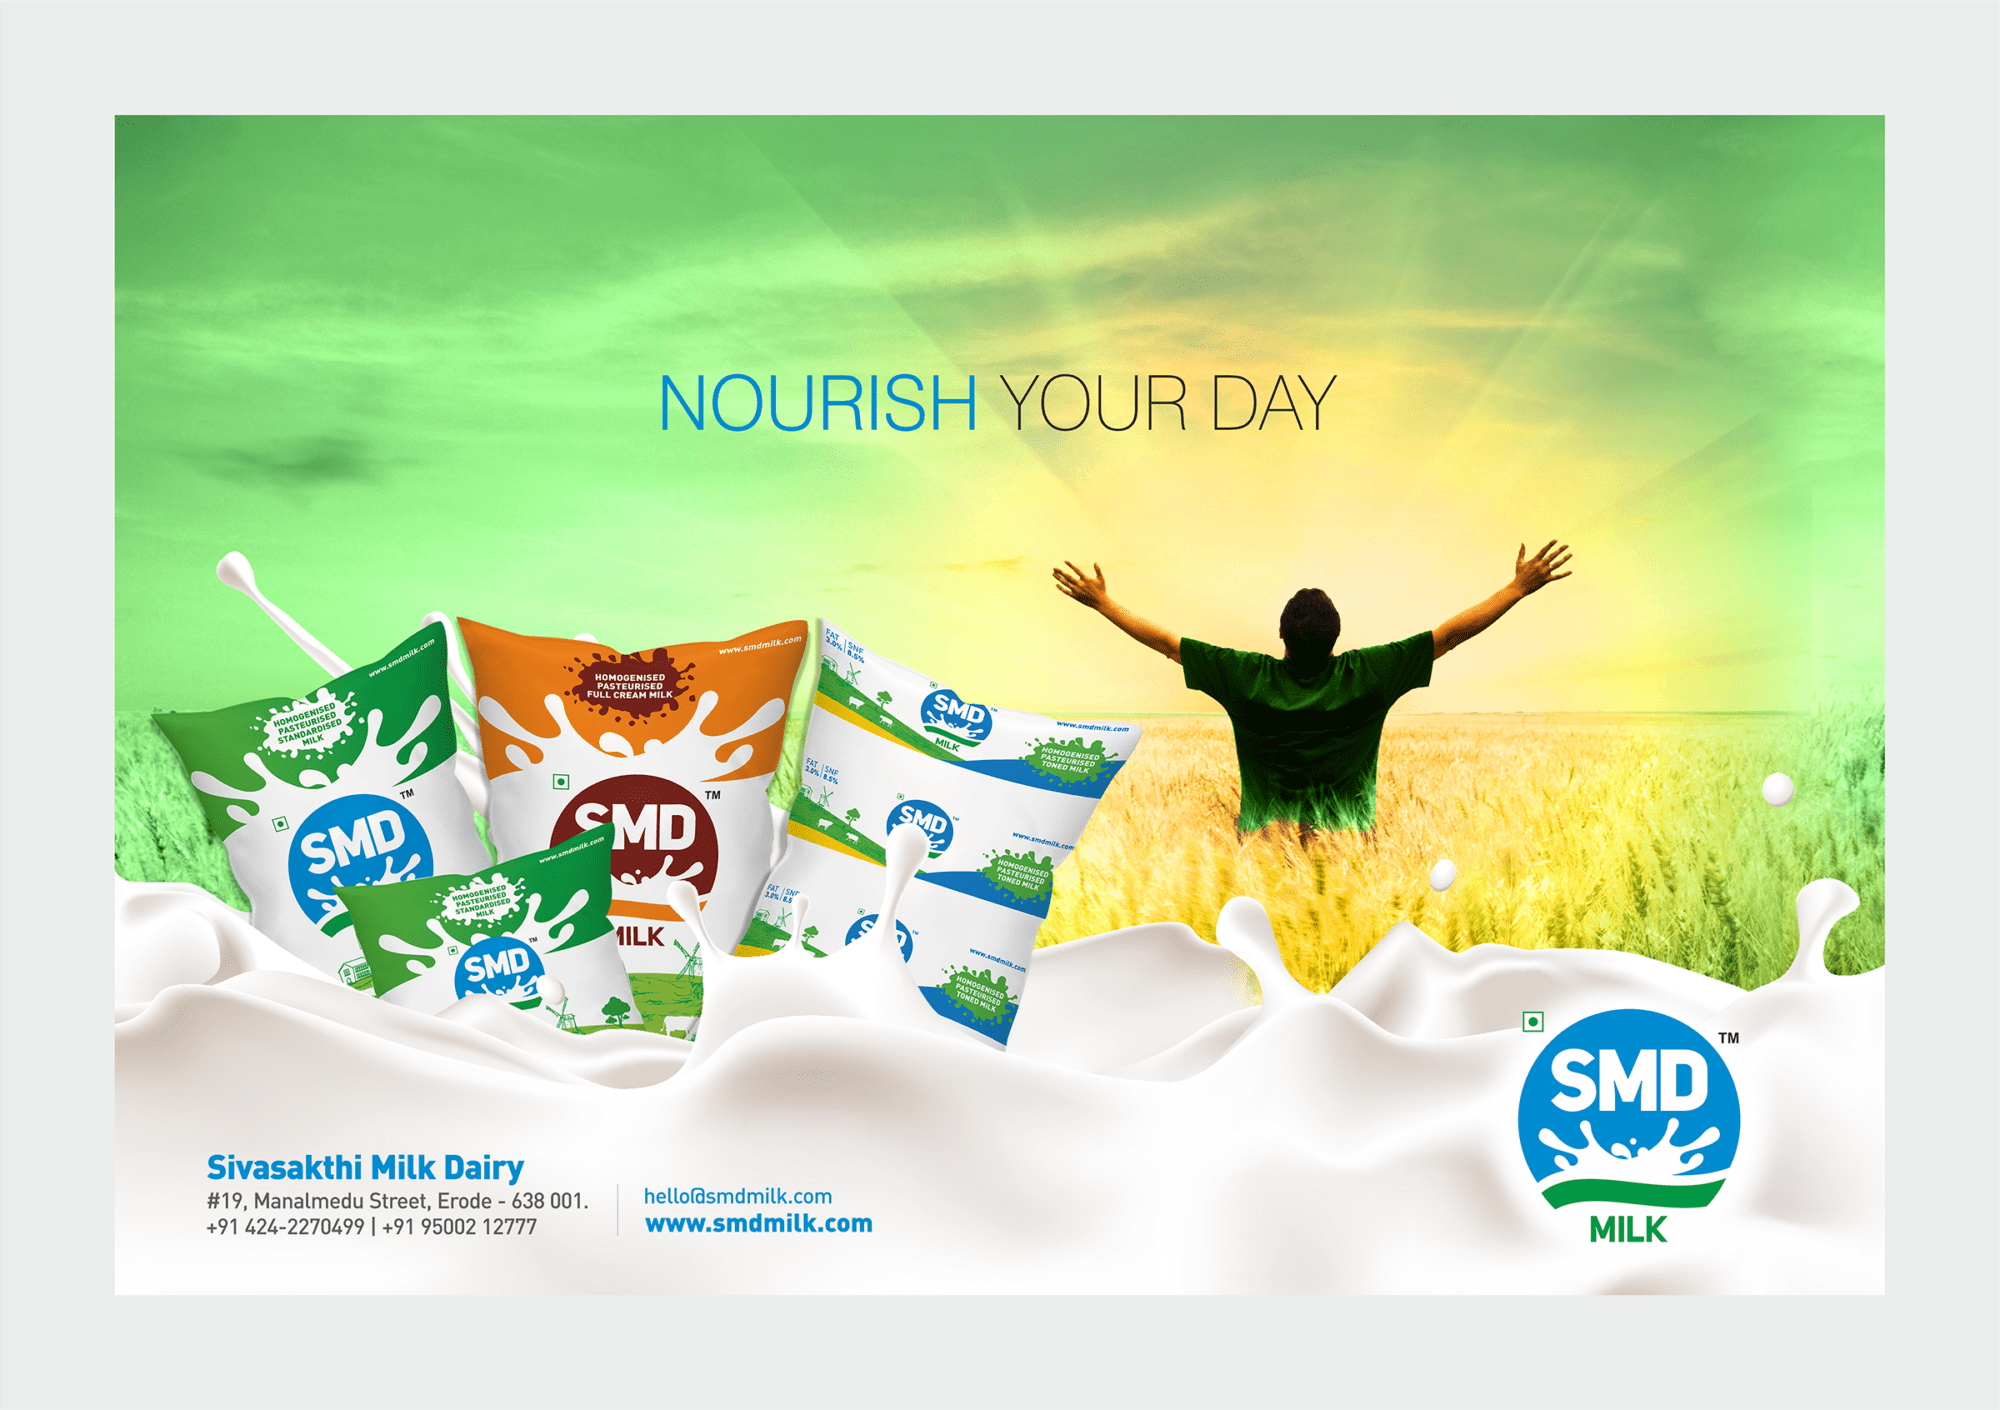 SMD Siva Sakthi Milk Dairy Erode Poster Design by Creative Prints thecreativeprints